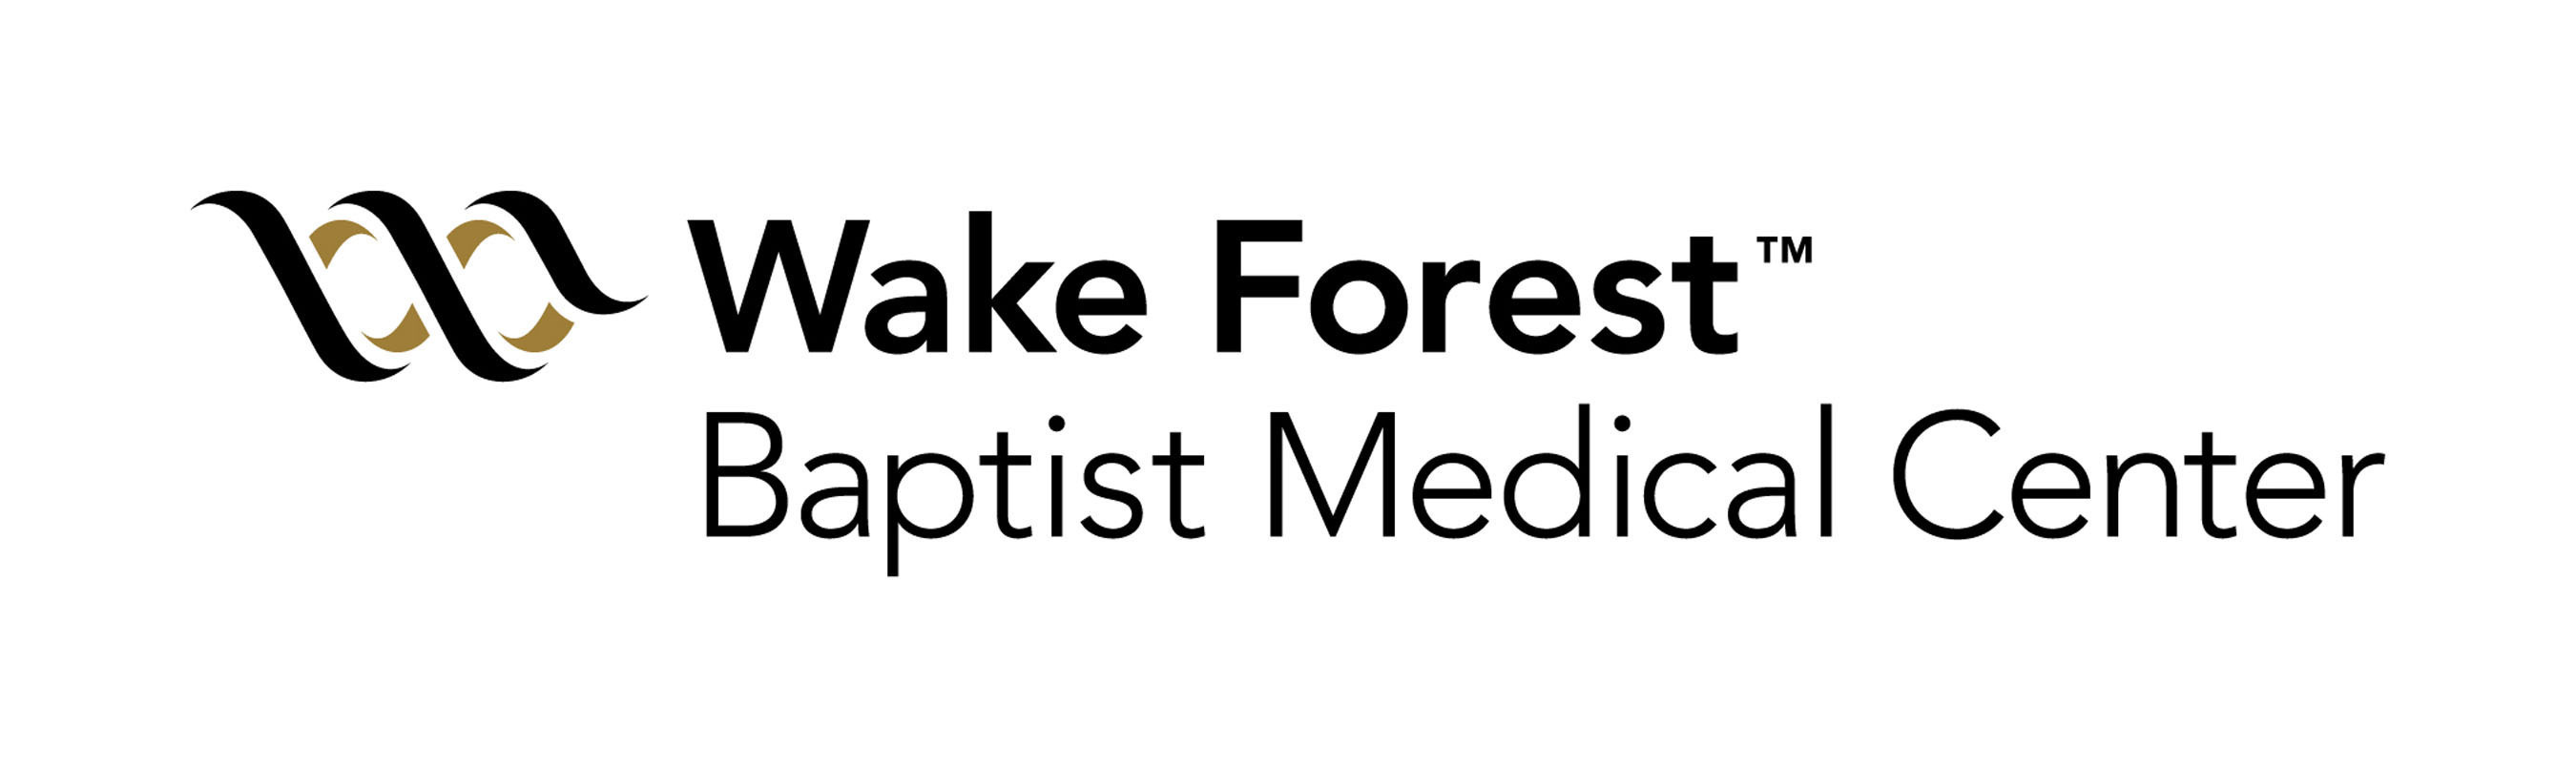 Wake Forest Baptist Medical Center logo.